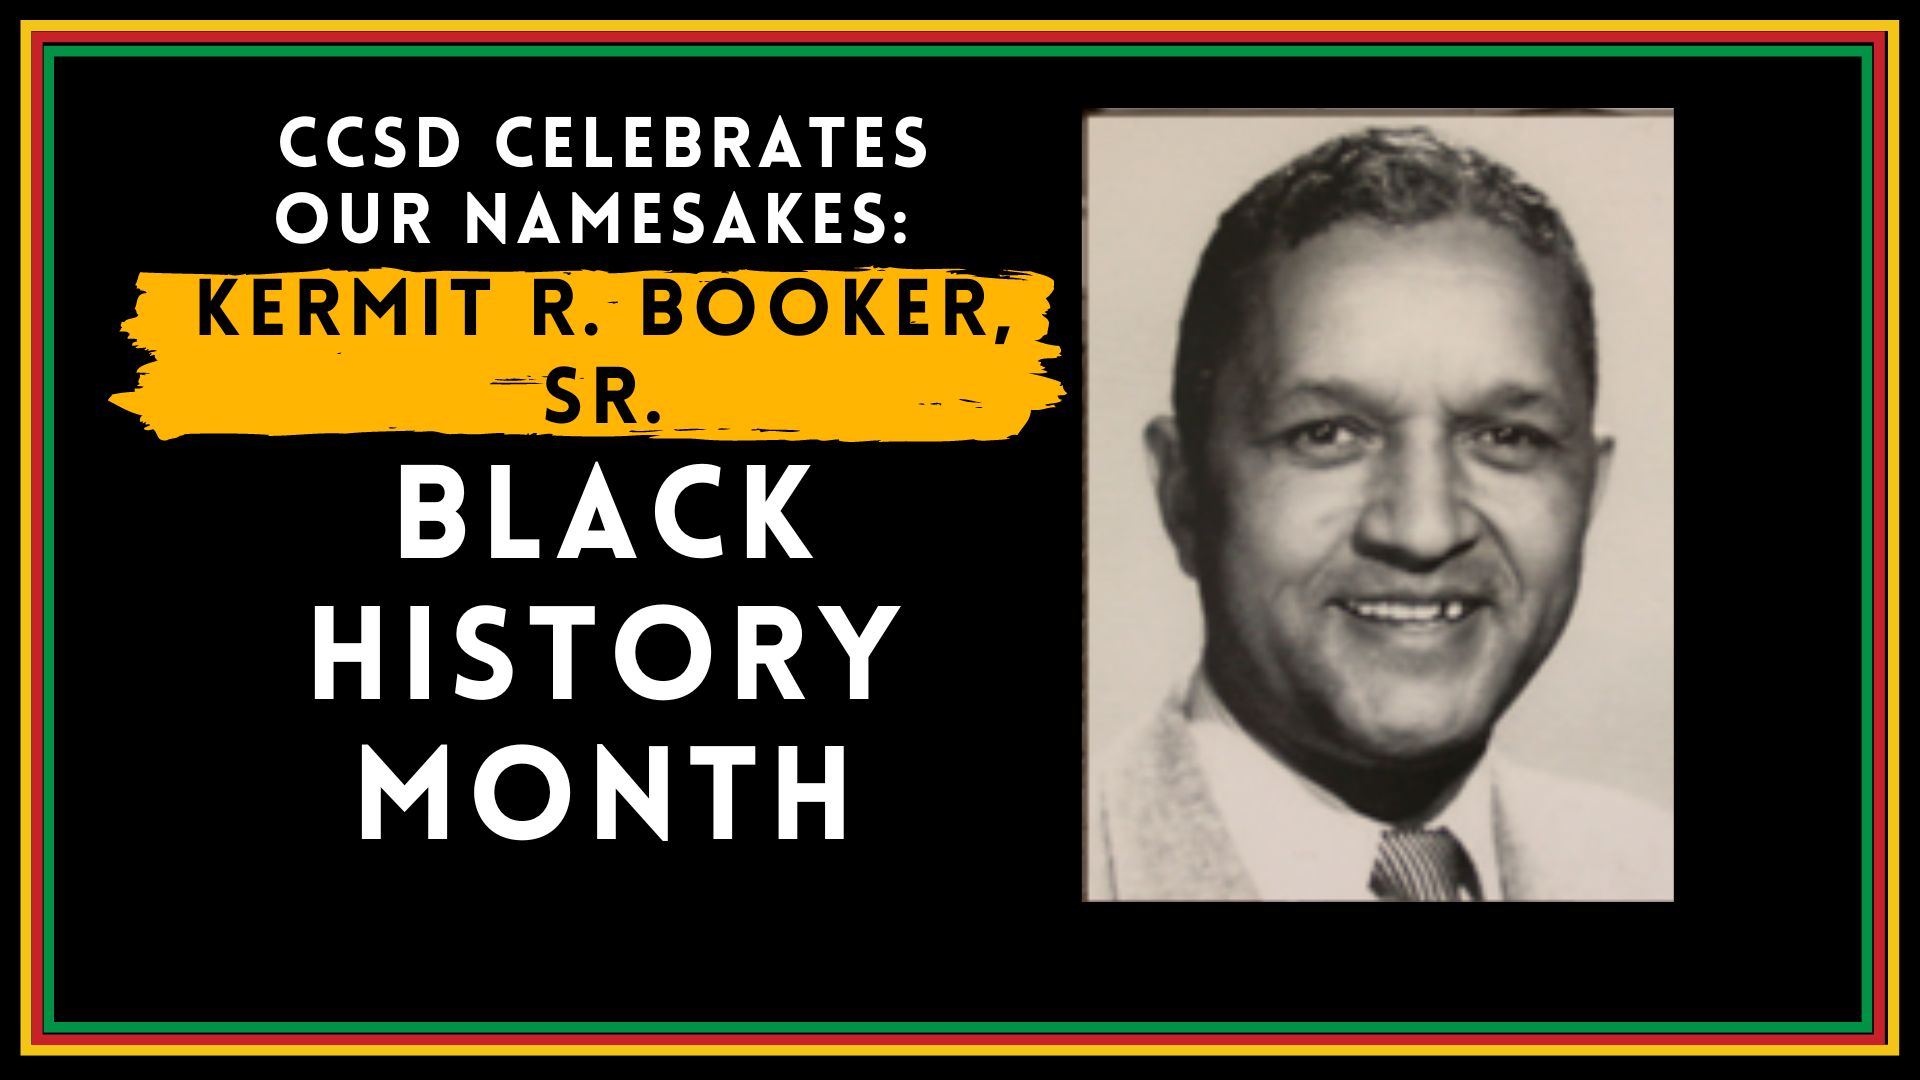 CCSD celebrates its namesakes: Kermit Roosevelt Booker, Sr.